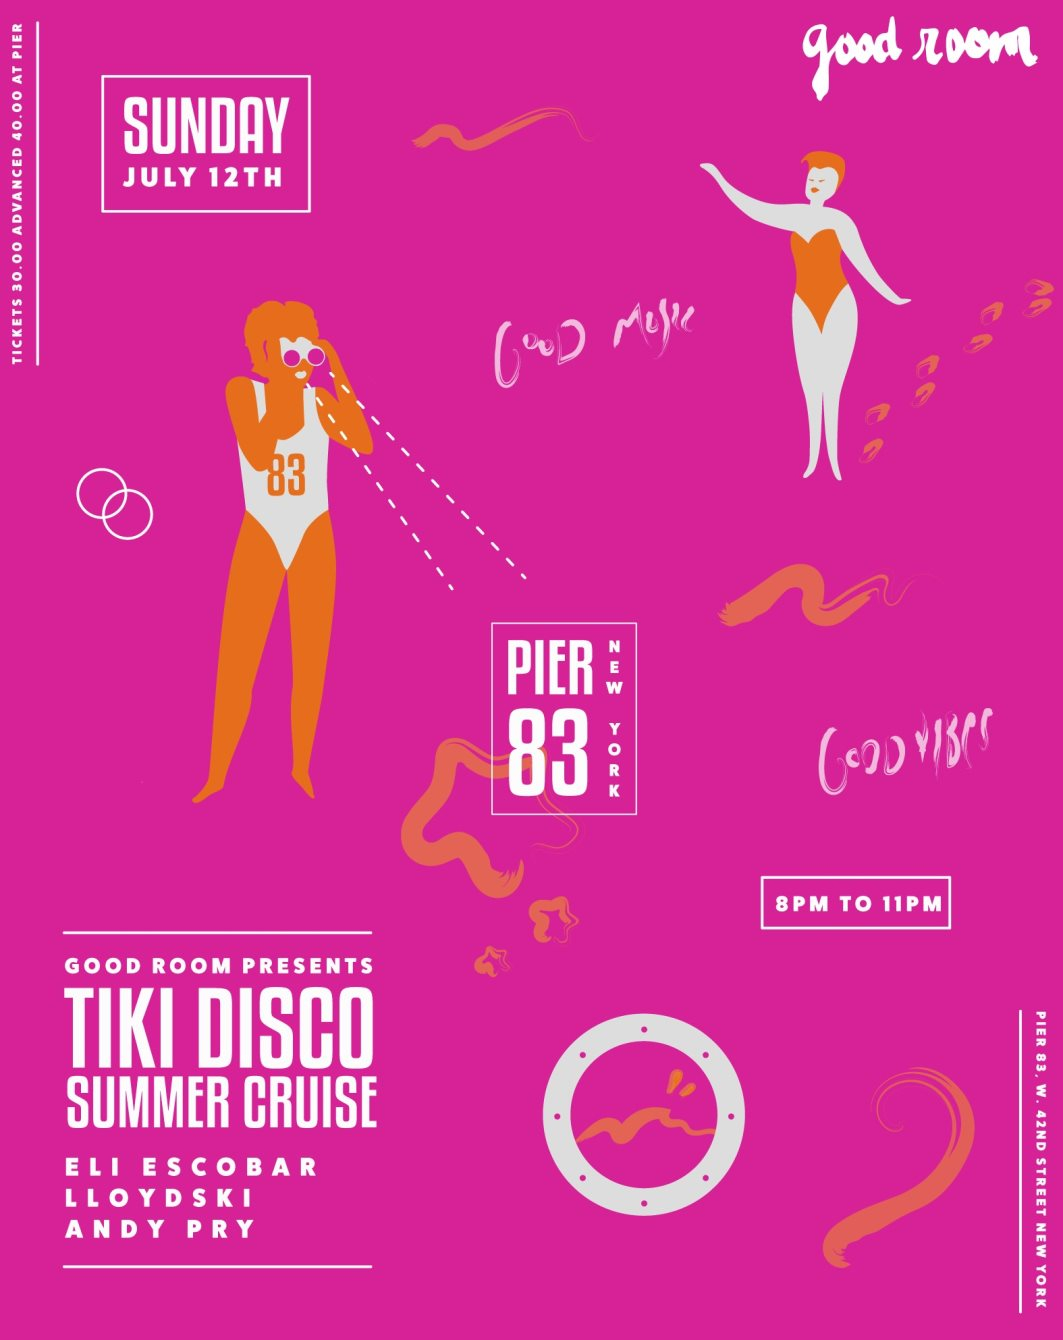 Good Room presents Tiki Disco Summer Cruise - Flyer front